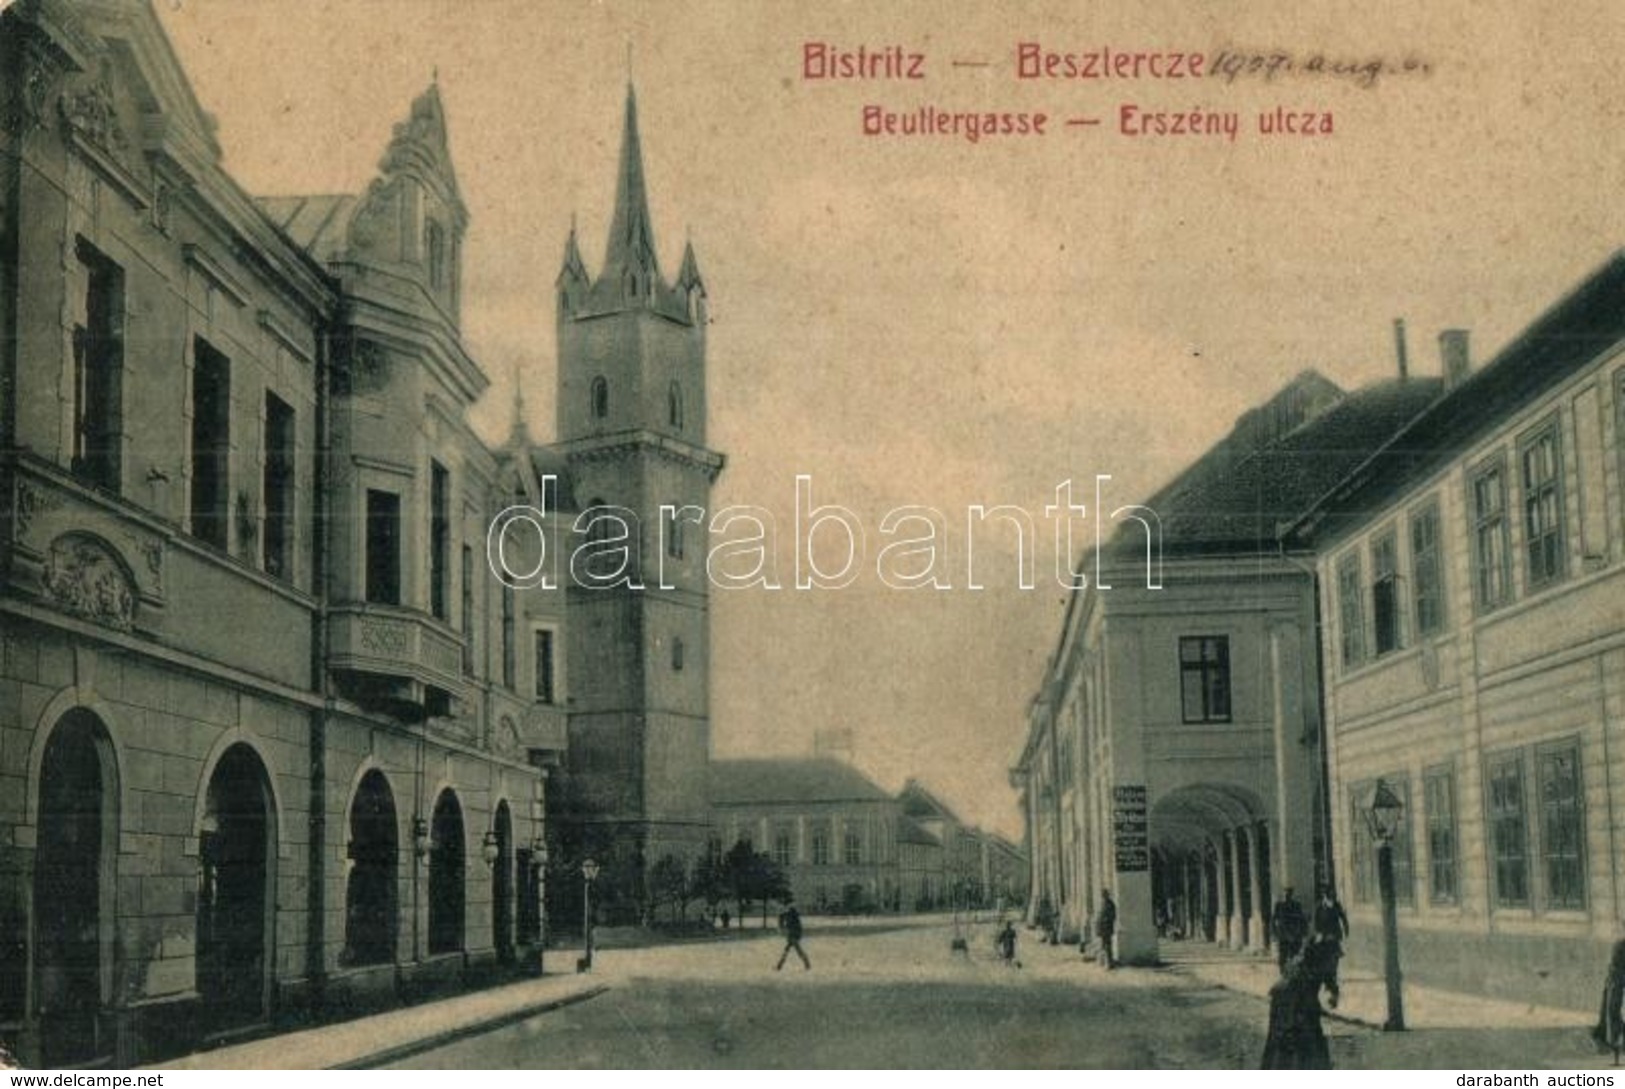 T3/T4 Beszterce, Bistritz, Bistrita; Beutlergasse / Erszény Utca, Evangélikus Templom. W. L. (?) No. 398. / Street View, - Ohne Zuordnung